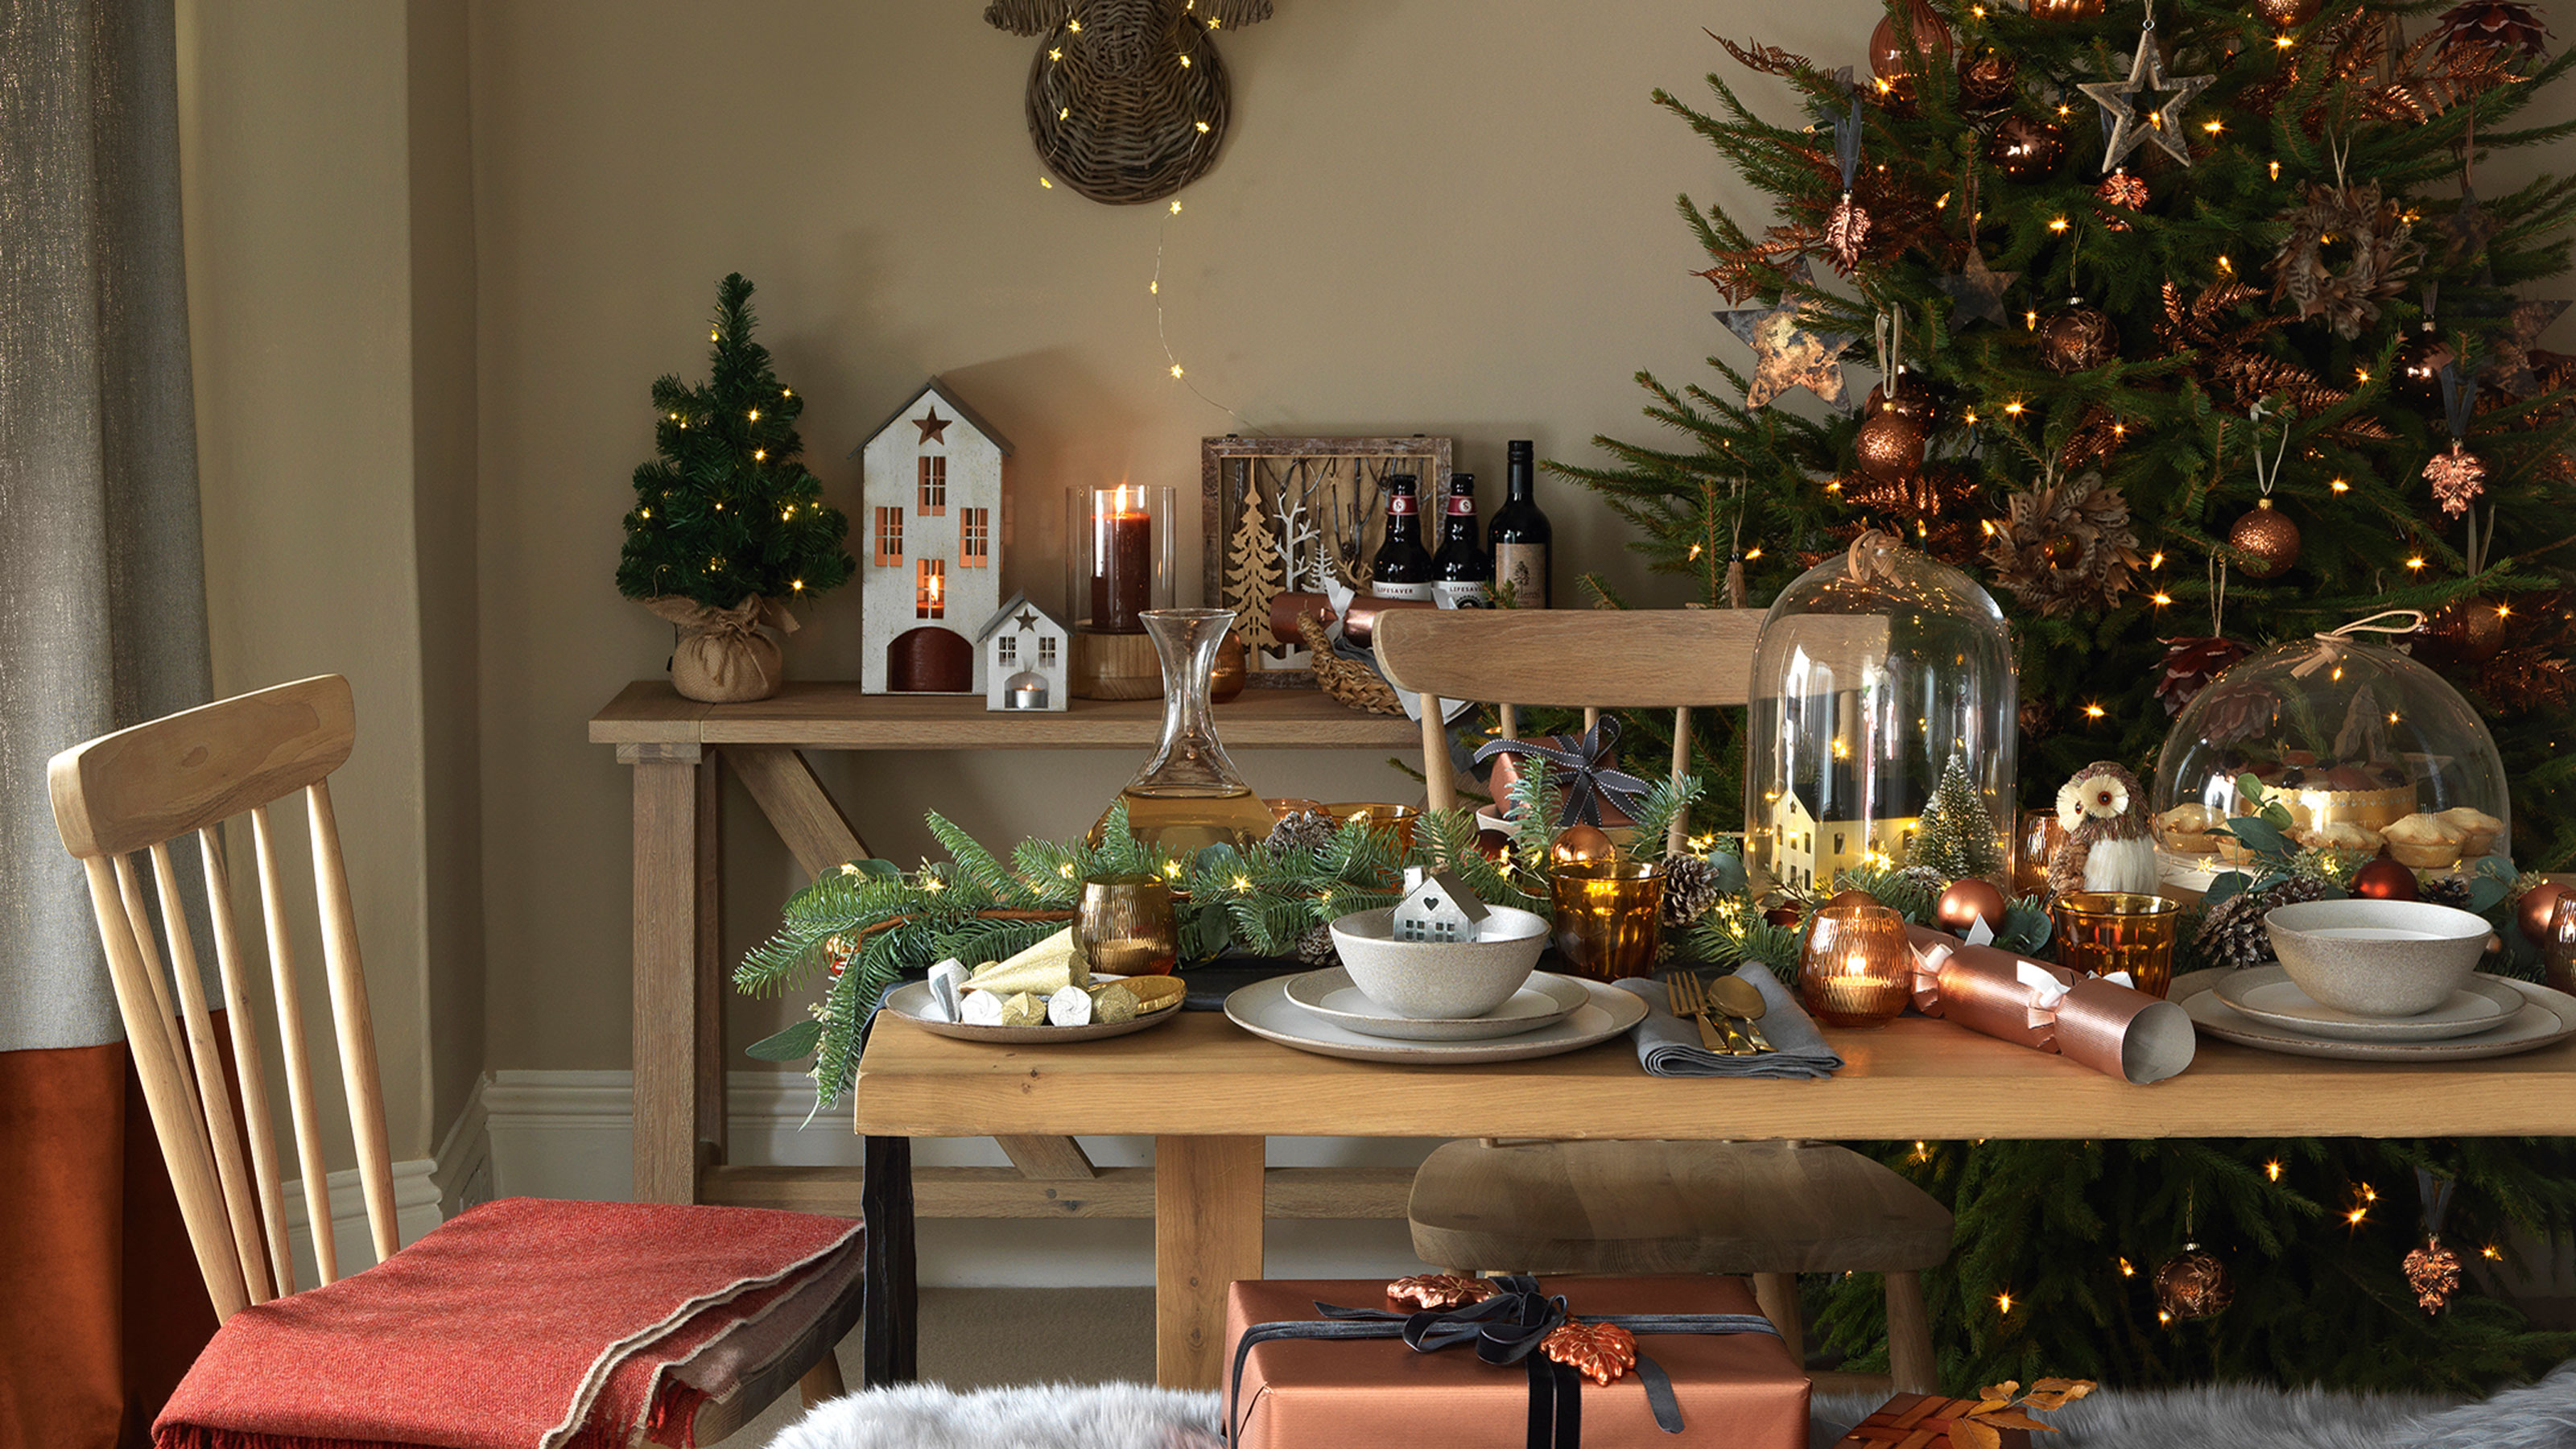 Christmas table centrepiece ideas – 24 ways to make a festive ...